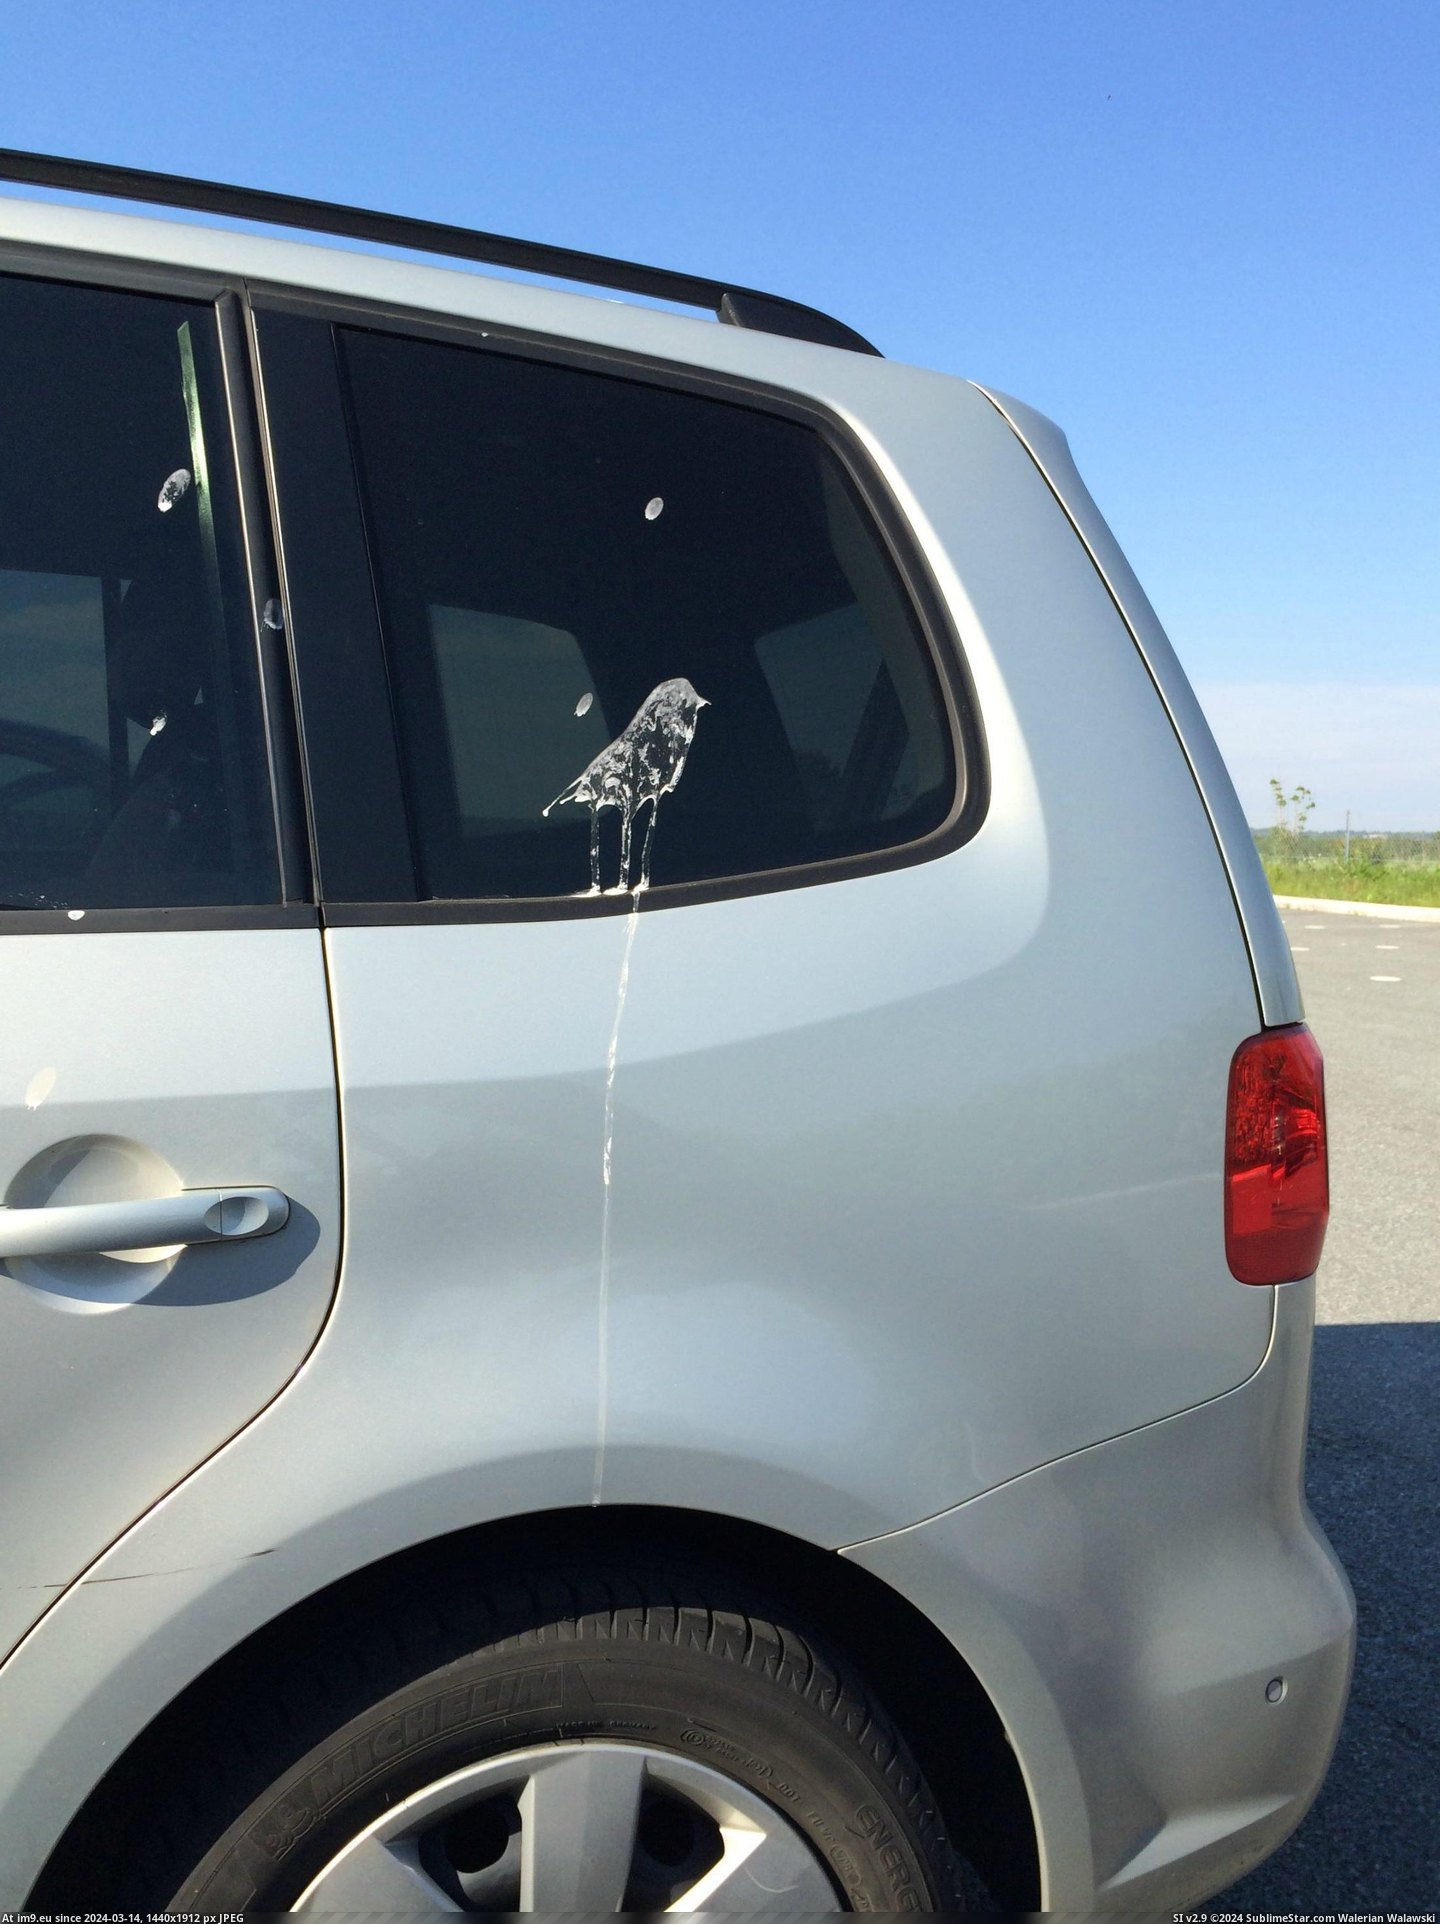 #Funny #Lot #Birdpoop #Parking #Masterpiece [Funny] Birdpoop masterpiece at the parking lot Pic. (Изображение из альбом My r/FUNNY favs))